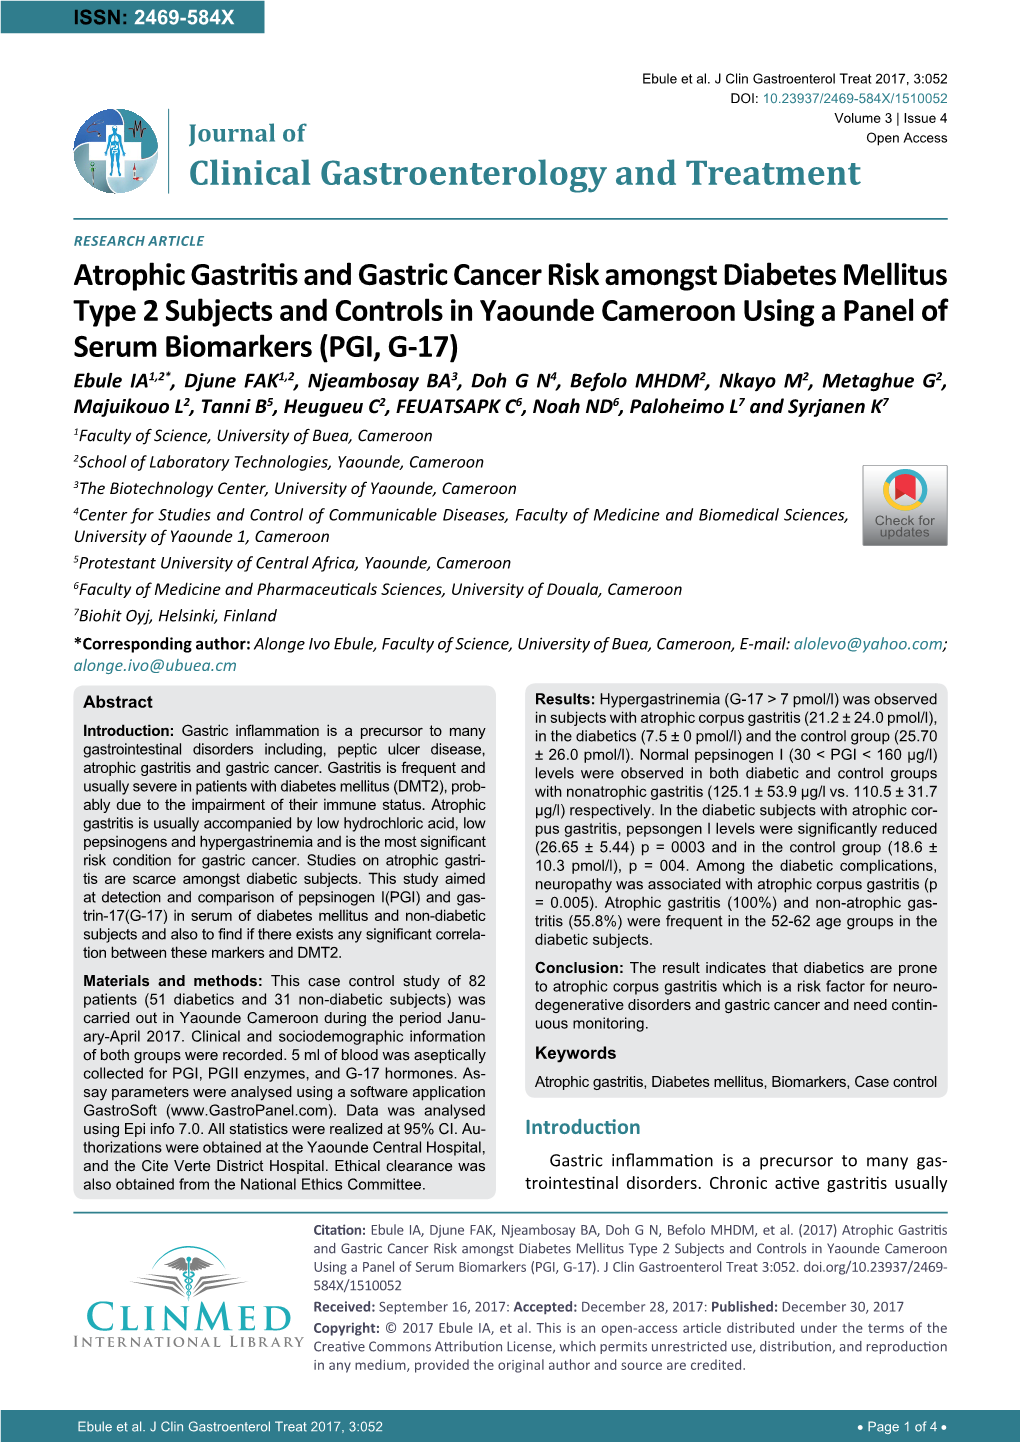 Atrophic Gastritis and Gastric Cancer Risk Amongst Diabetes Mellitus